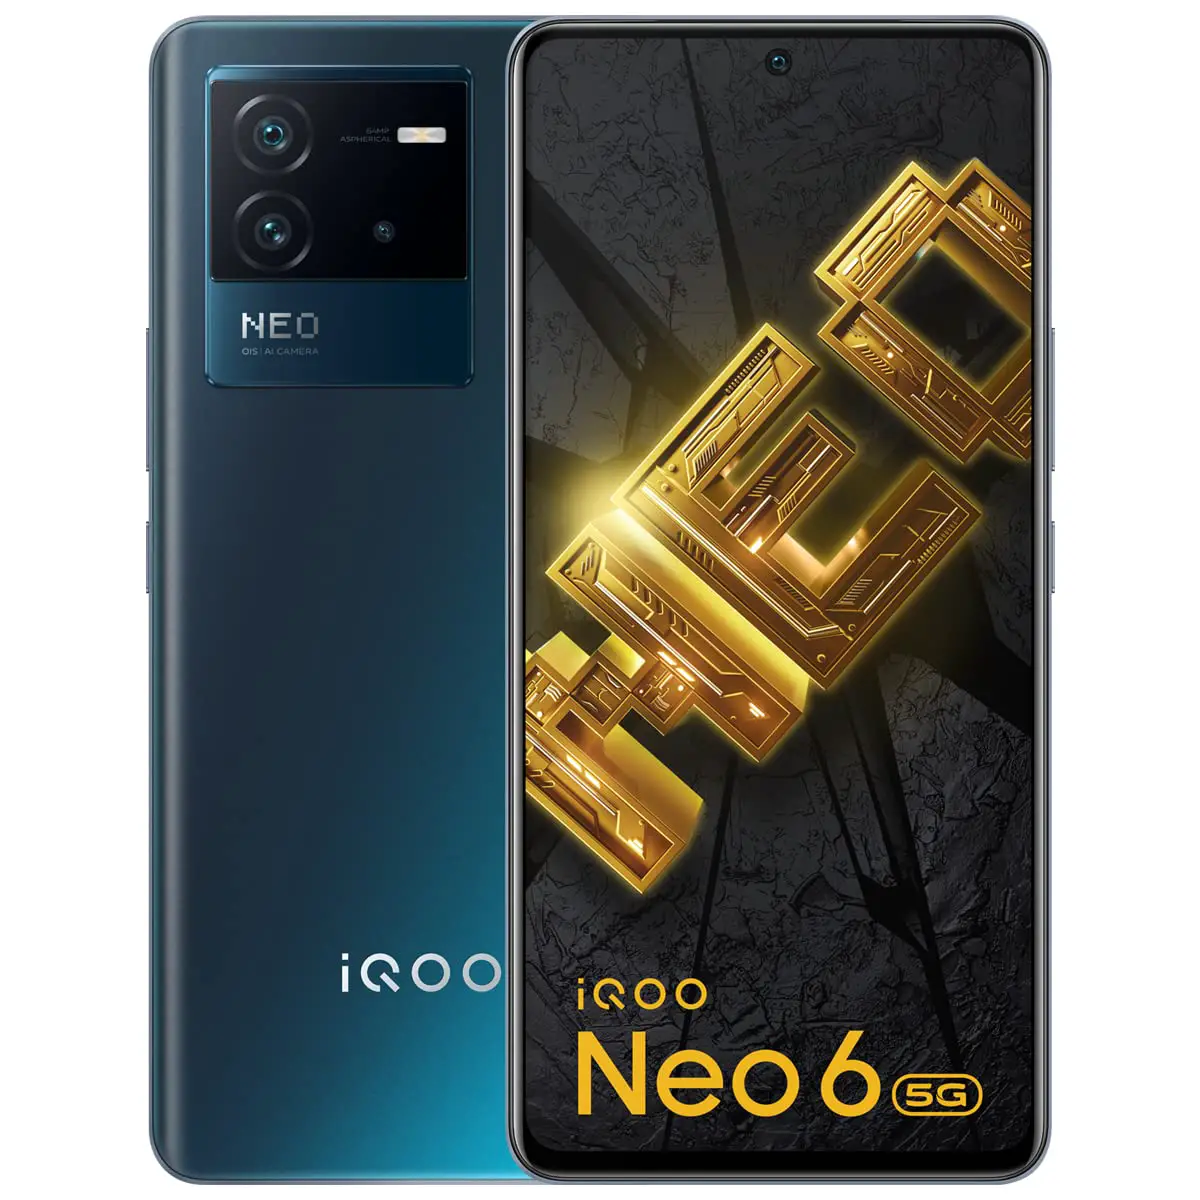 How to Factory Reset IQOO Neo 6 Mobile Phone?